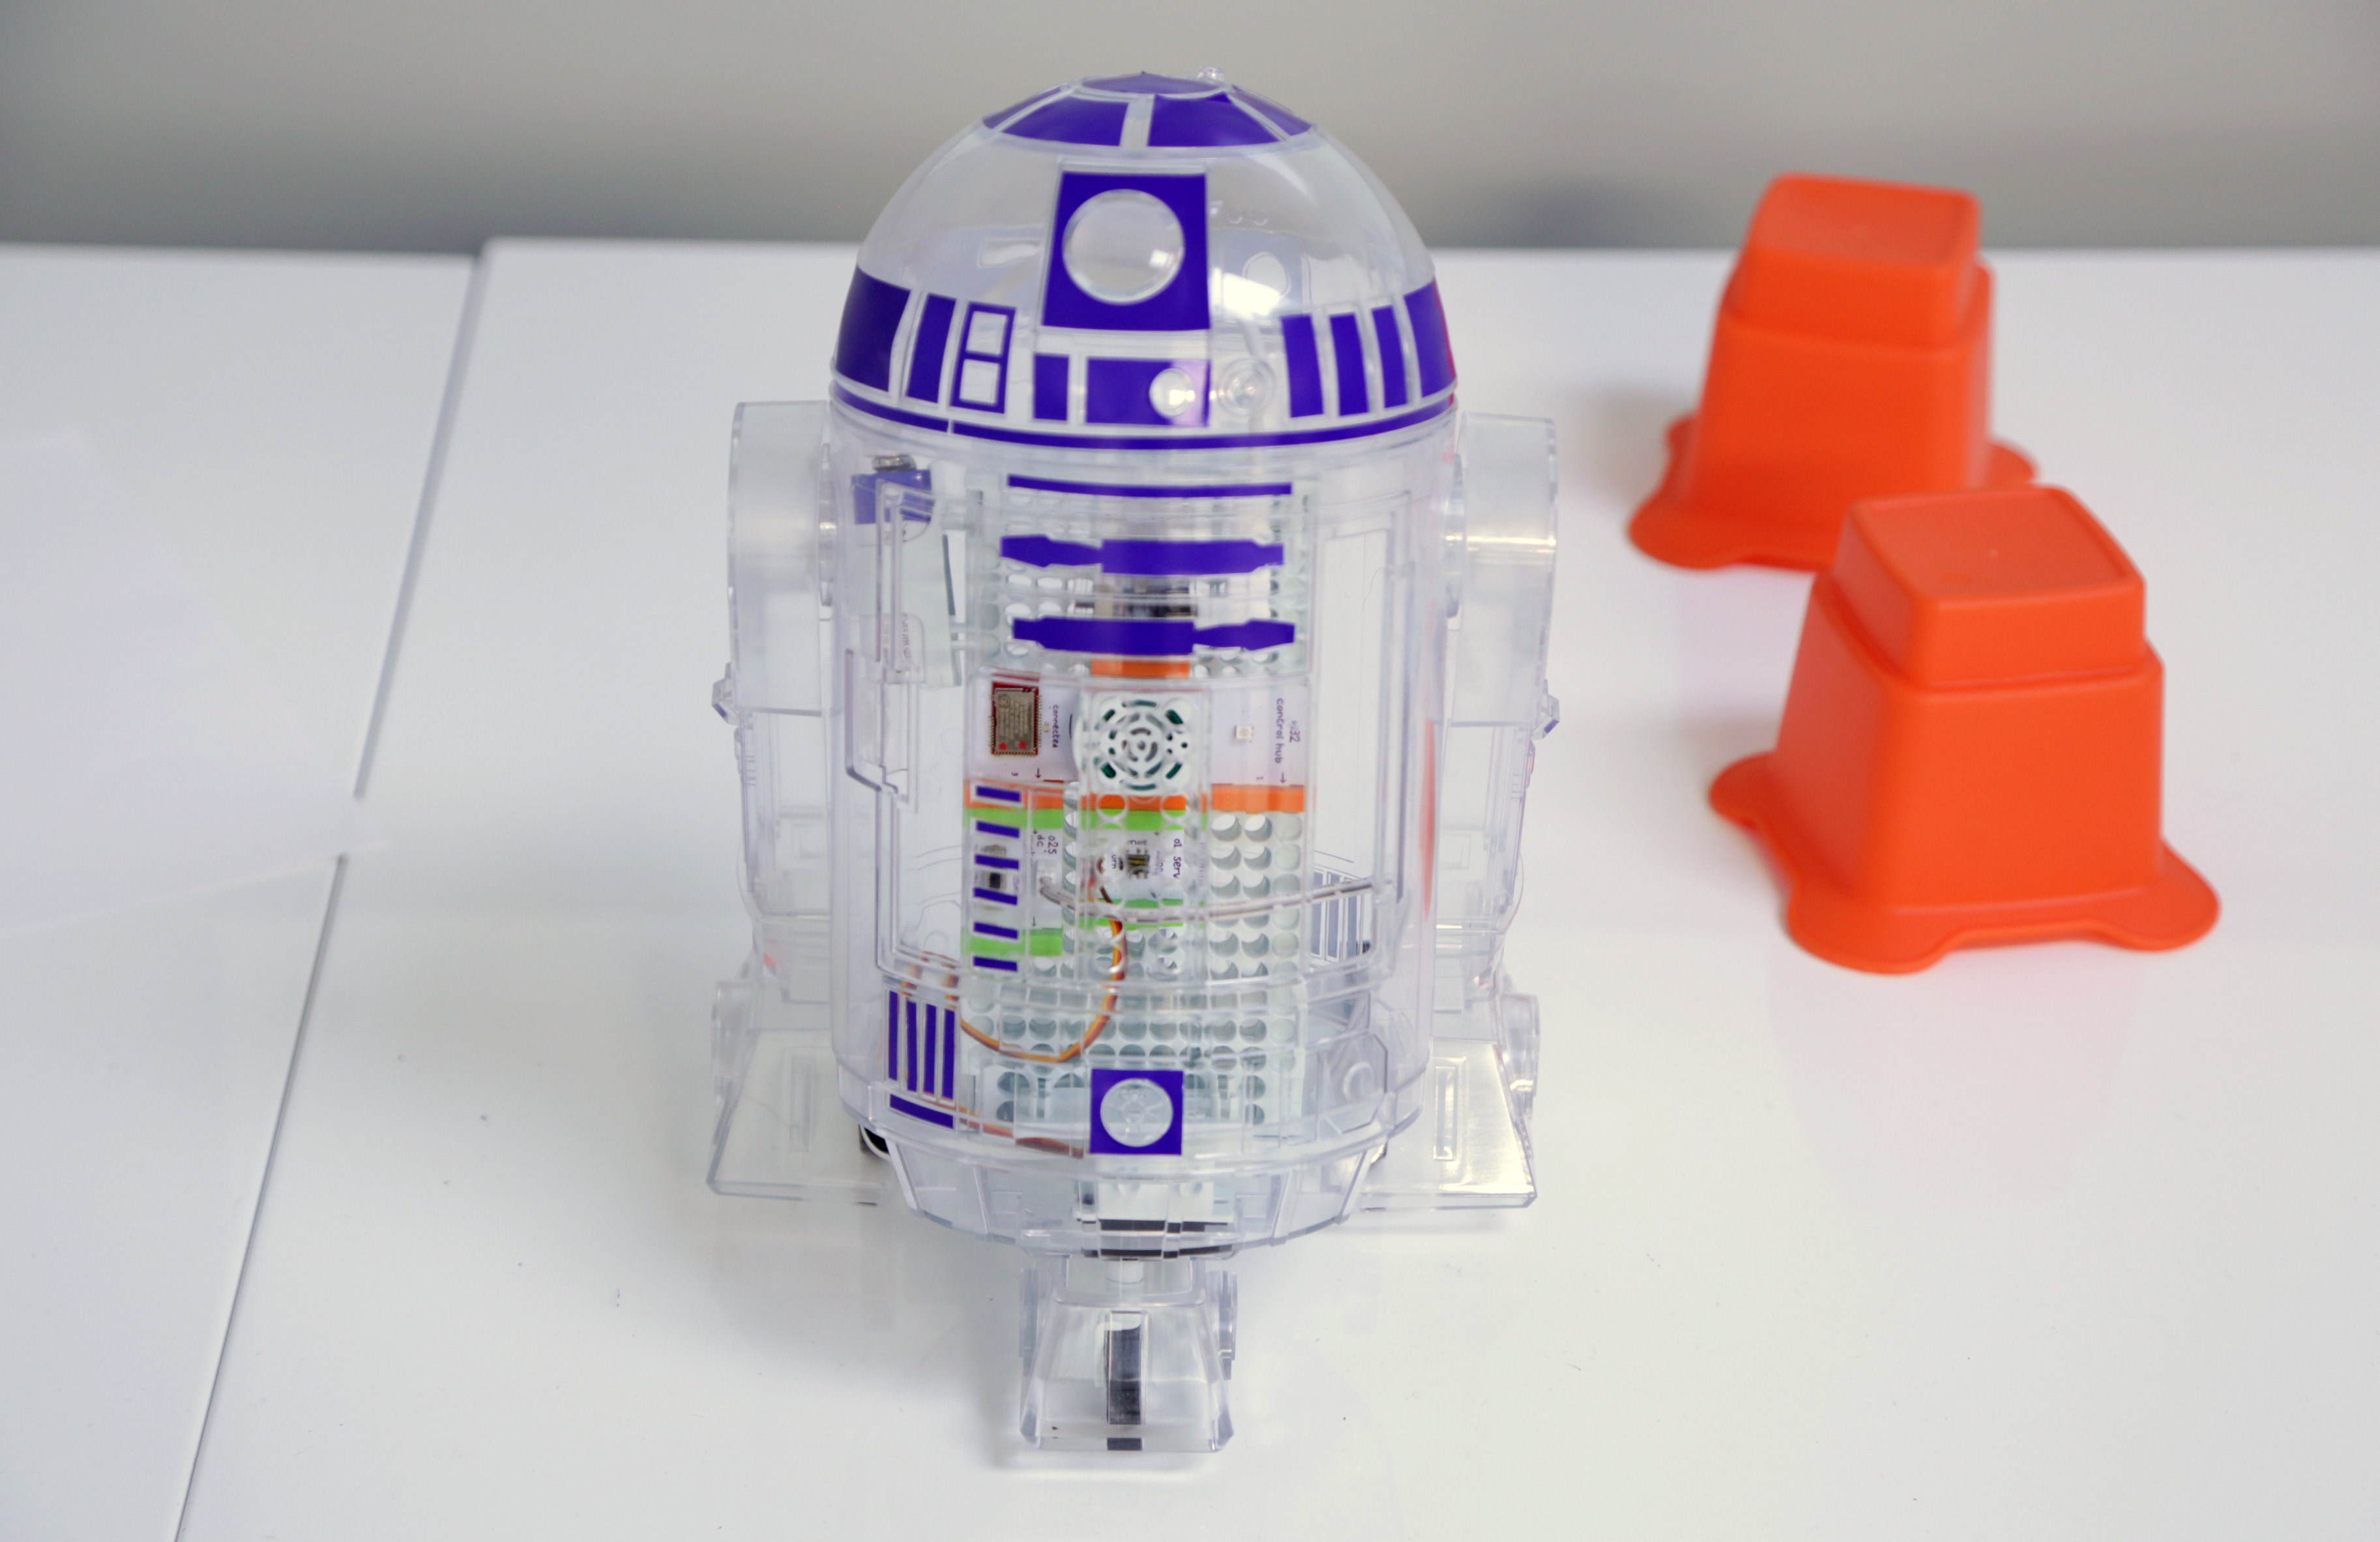 r2d2 droid inventor kit